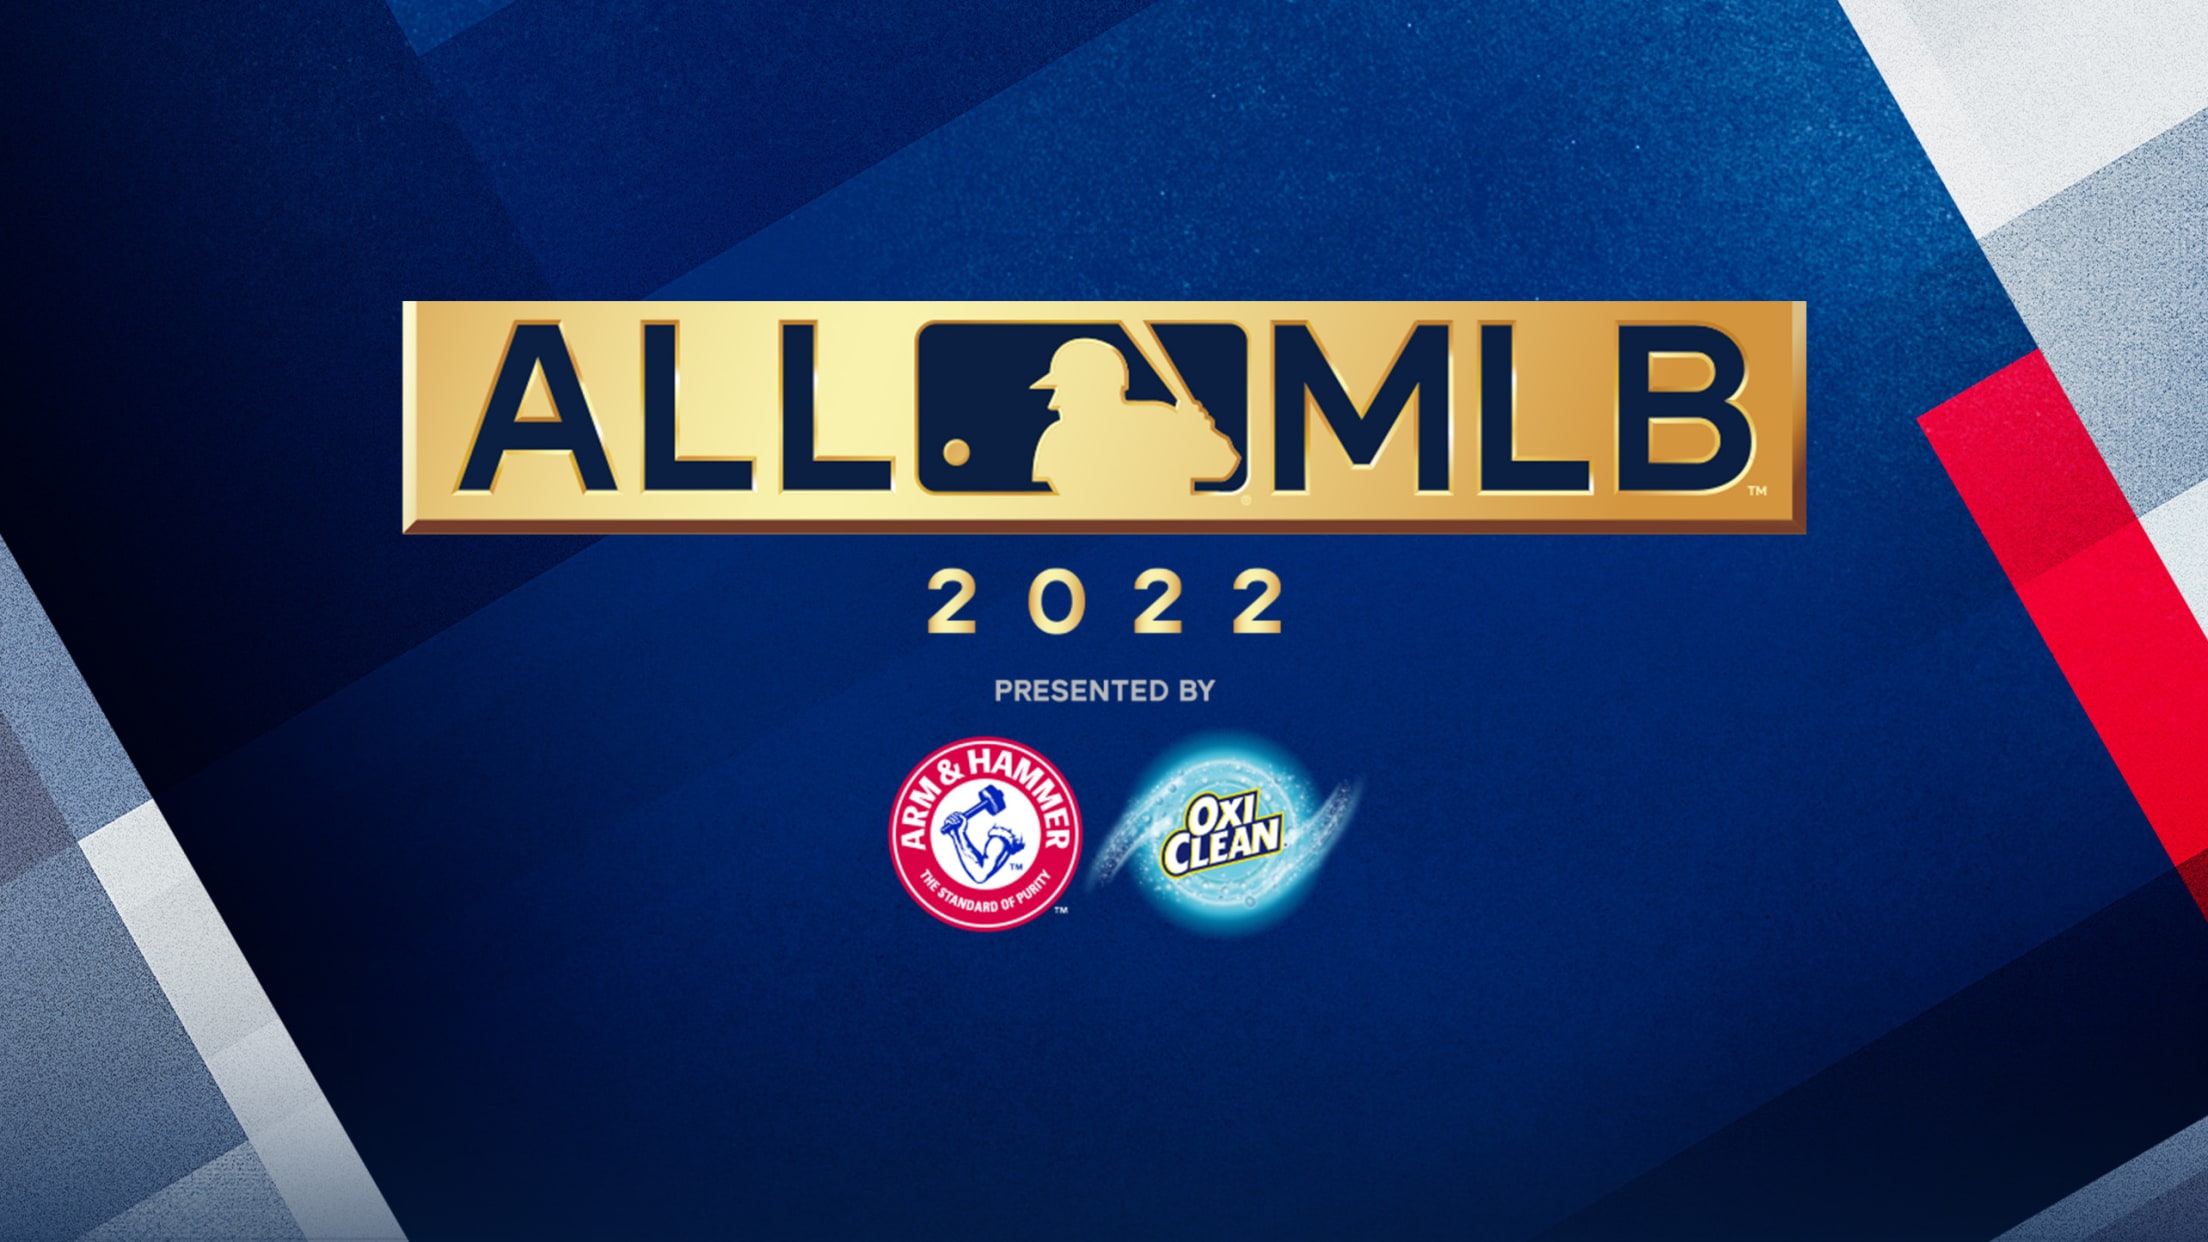 MLB MVP Award winners 2020